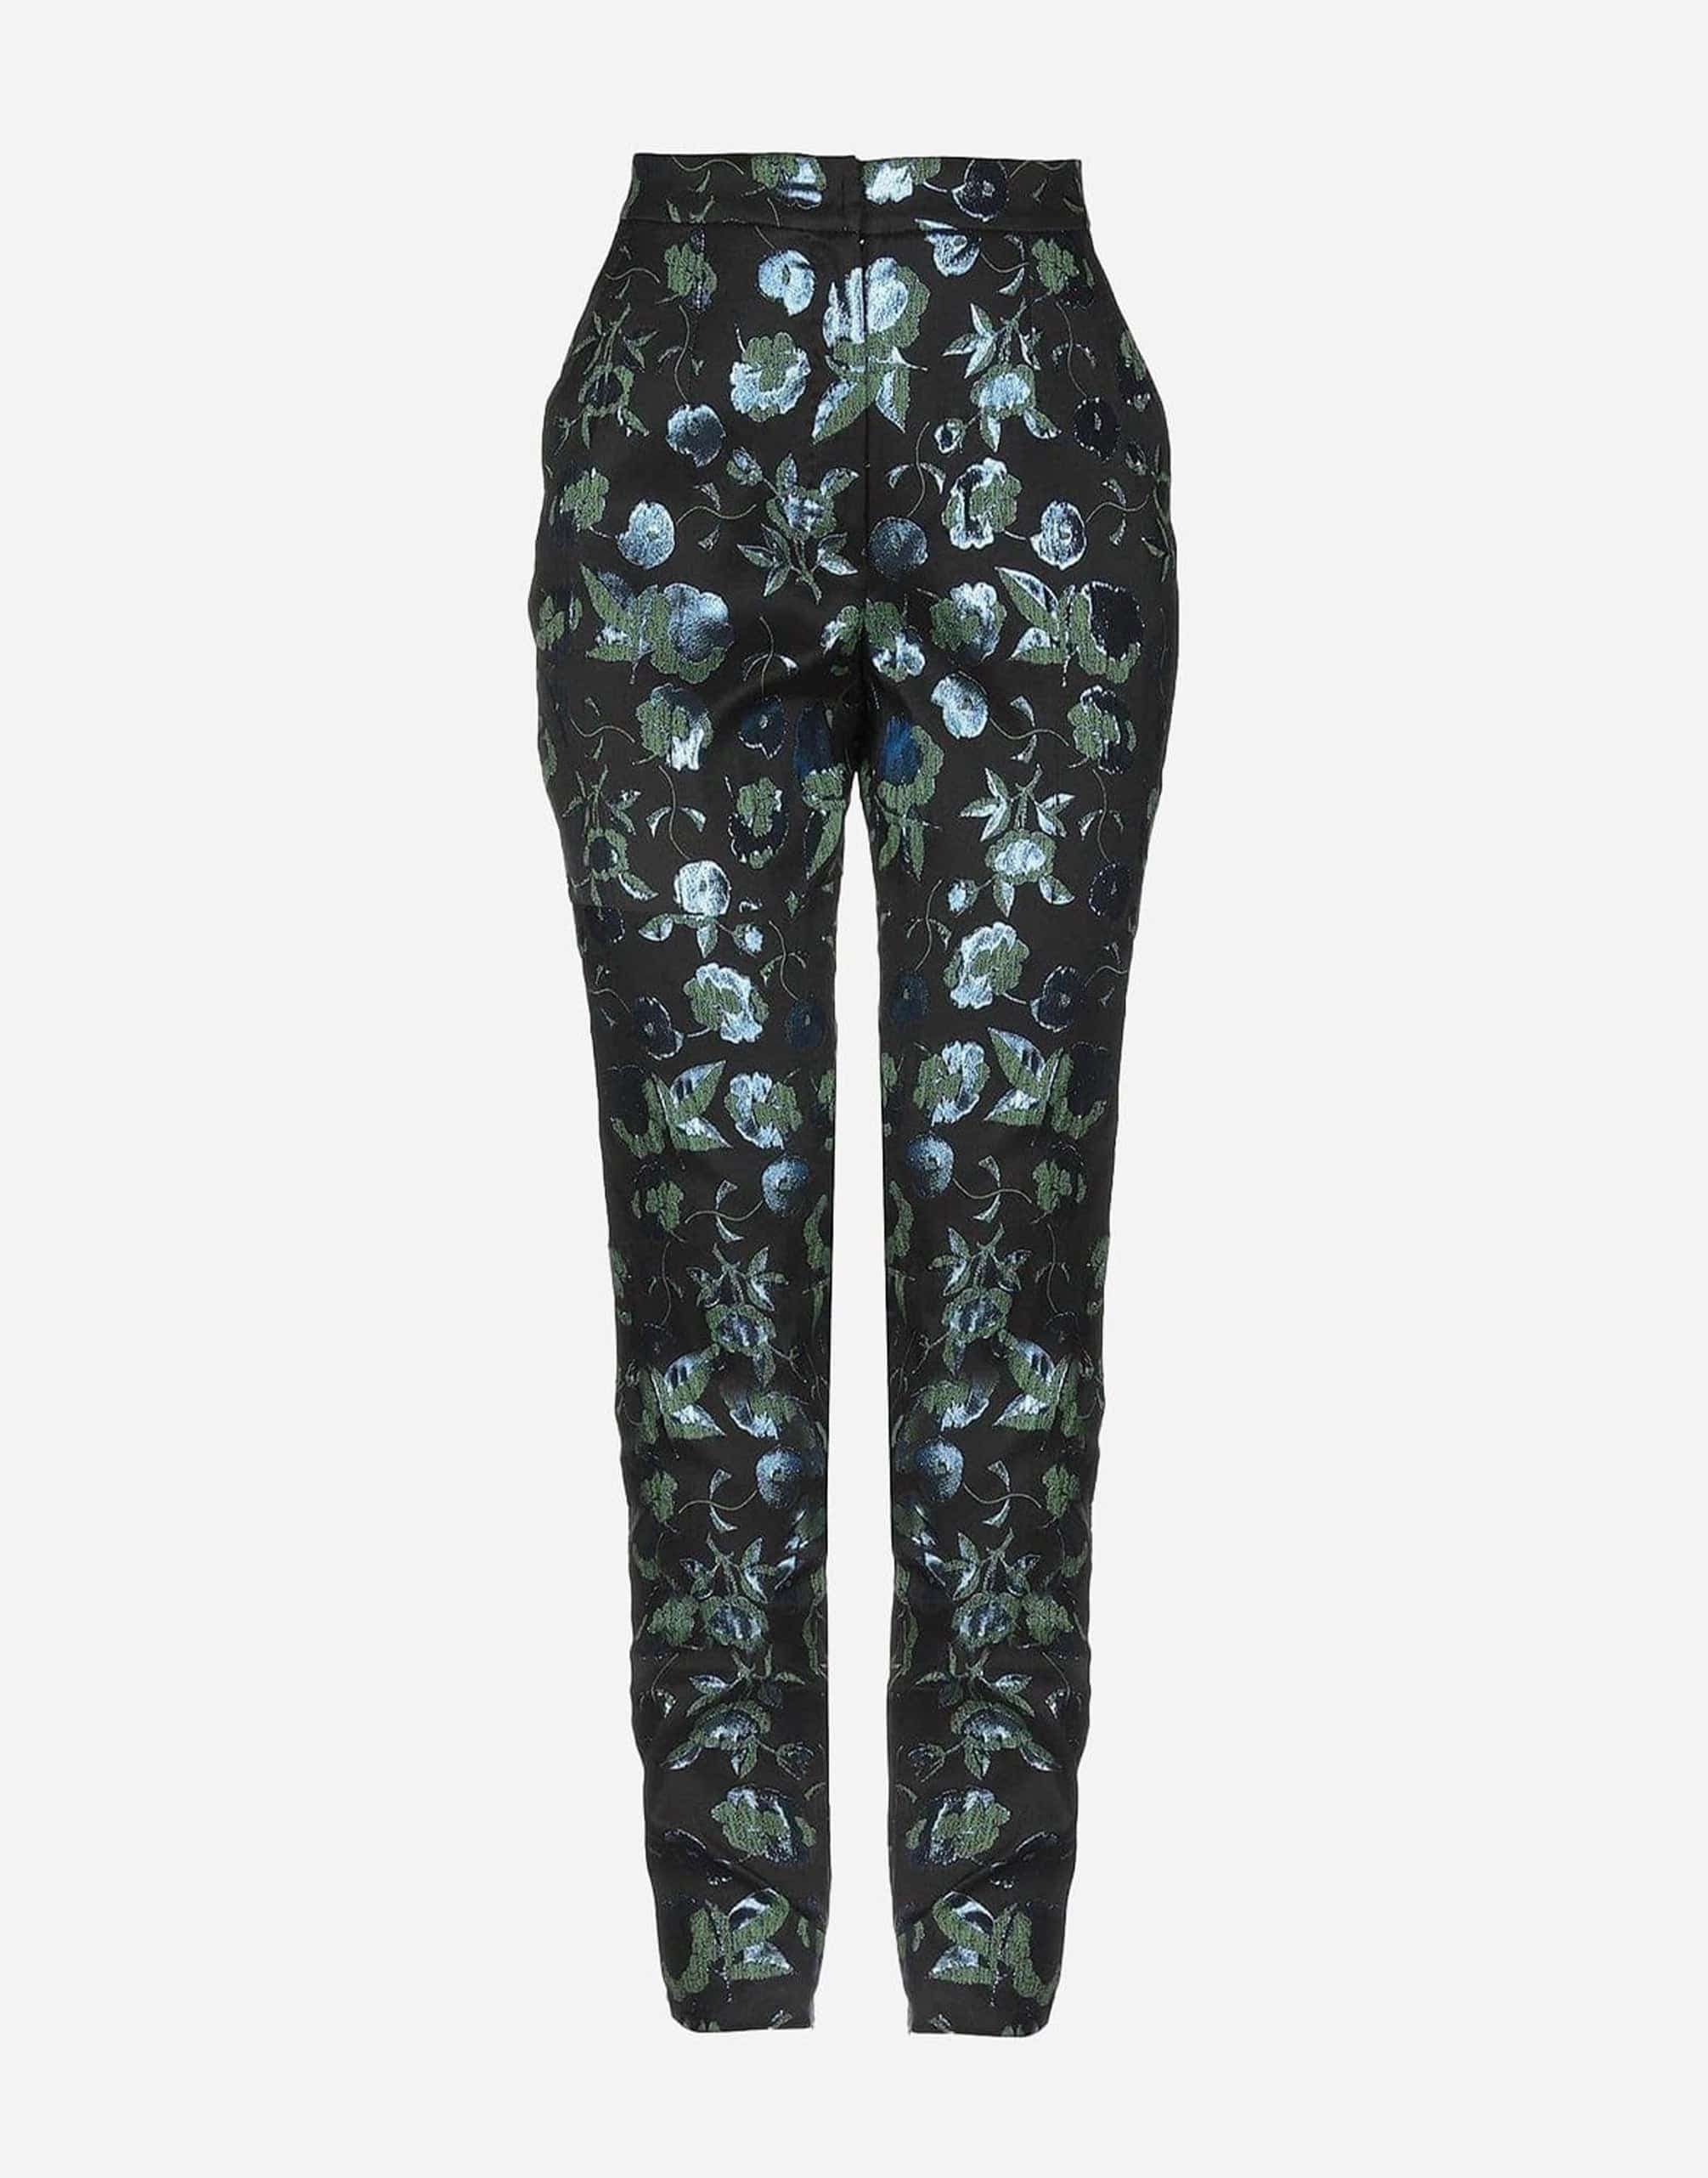 Dolce & Gabbana Floral-Print Metallic Trousers